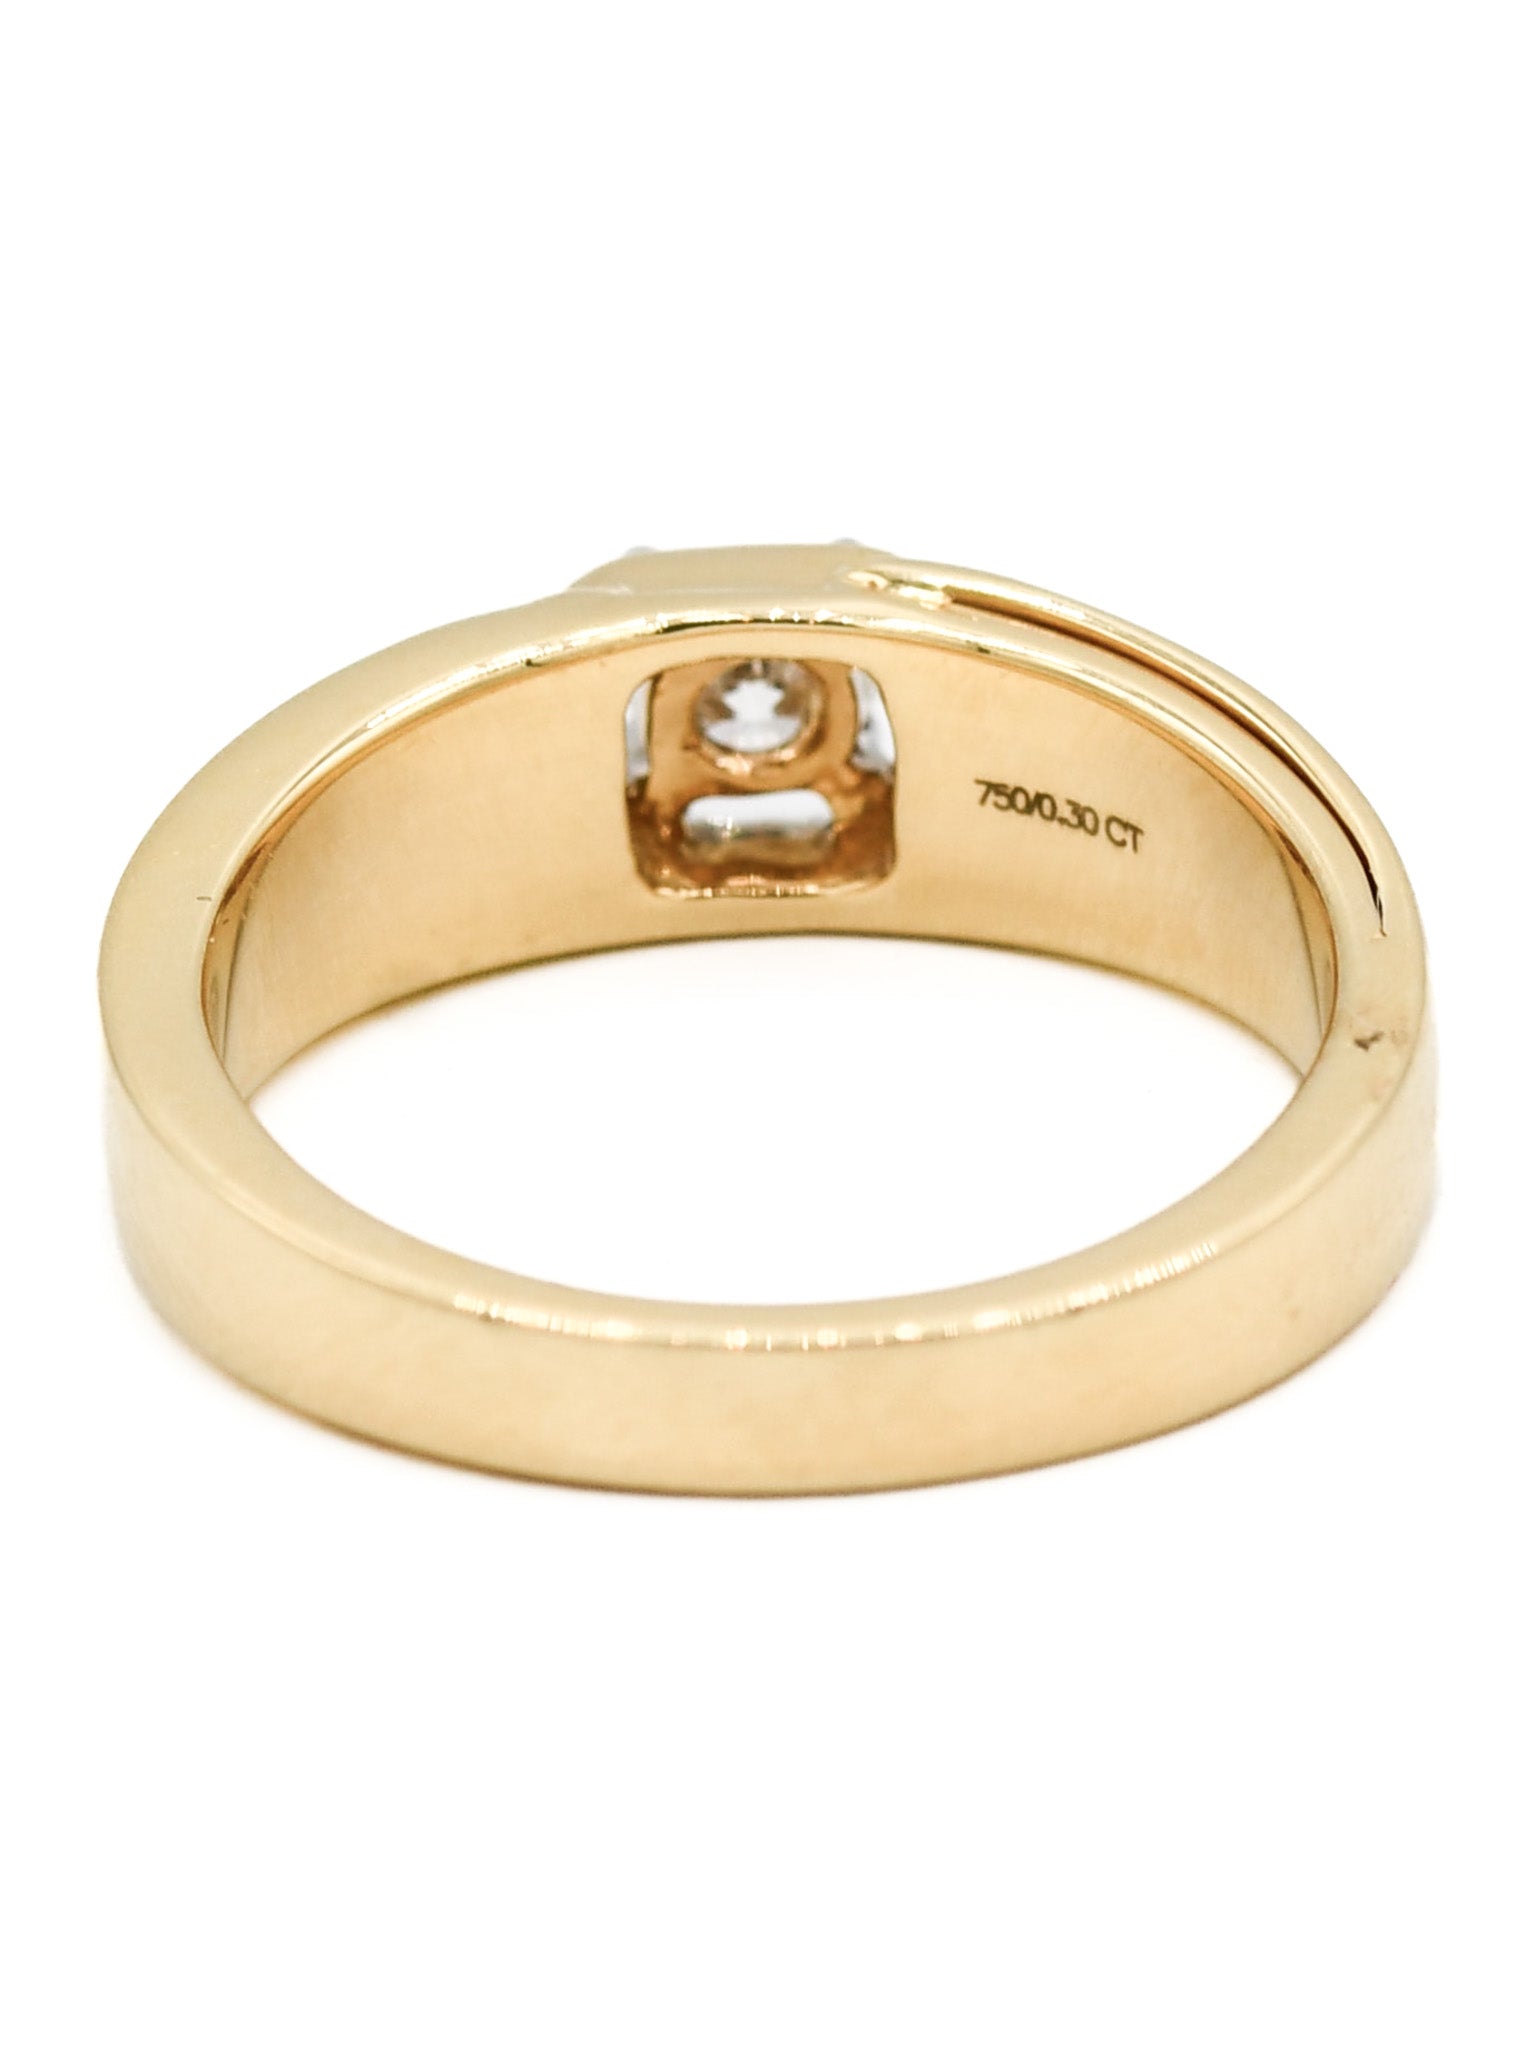 18ct Gold 0.30ct Diamond Ring - Roop Darshan